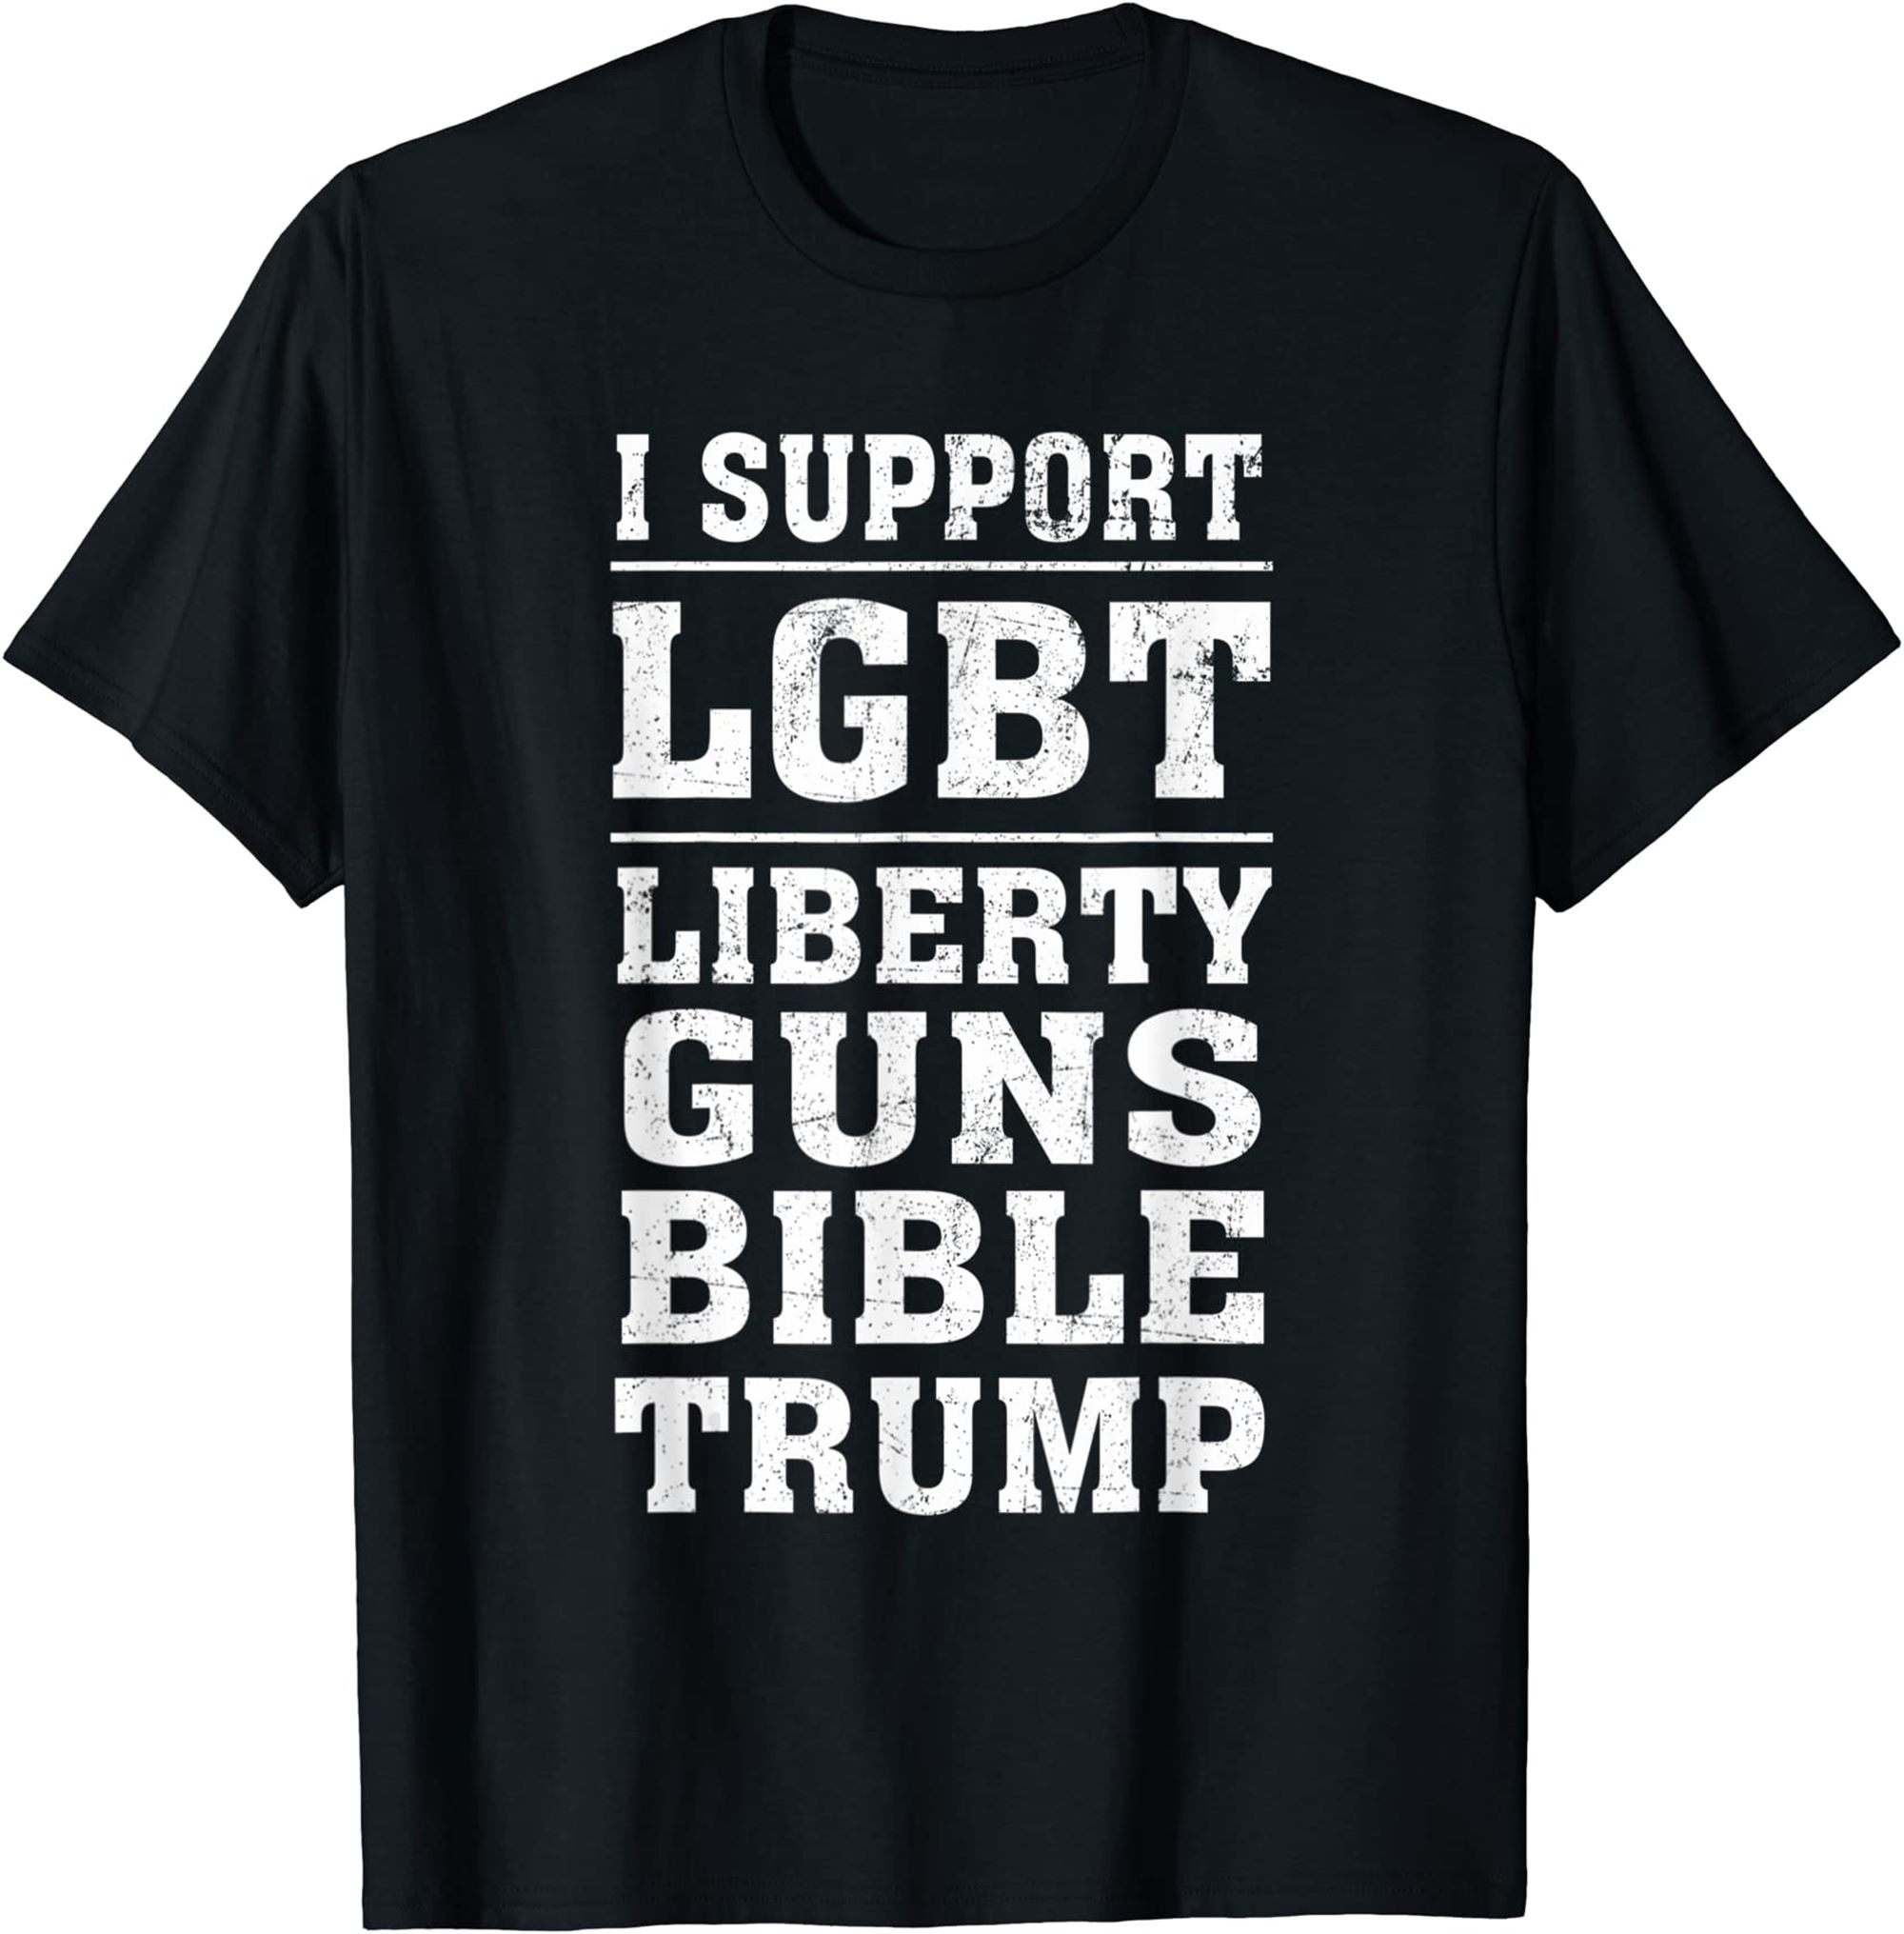 I Support Lgbt Liberty Guns Bible Amp Trump Gift T-shirt Full Size Up To 5xl